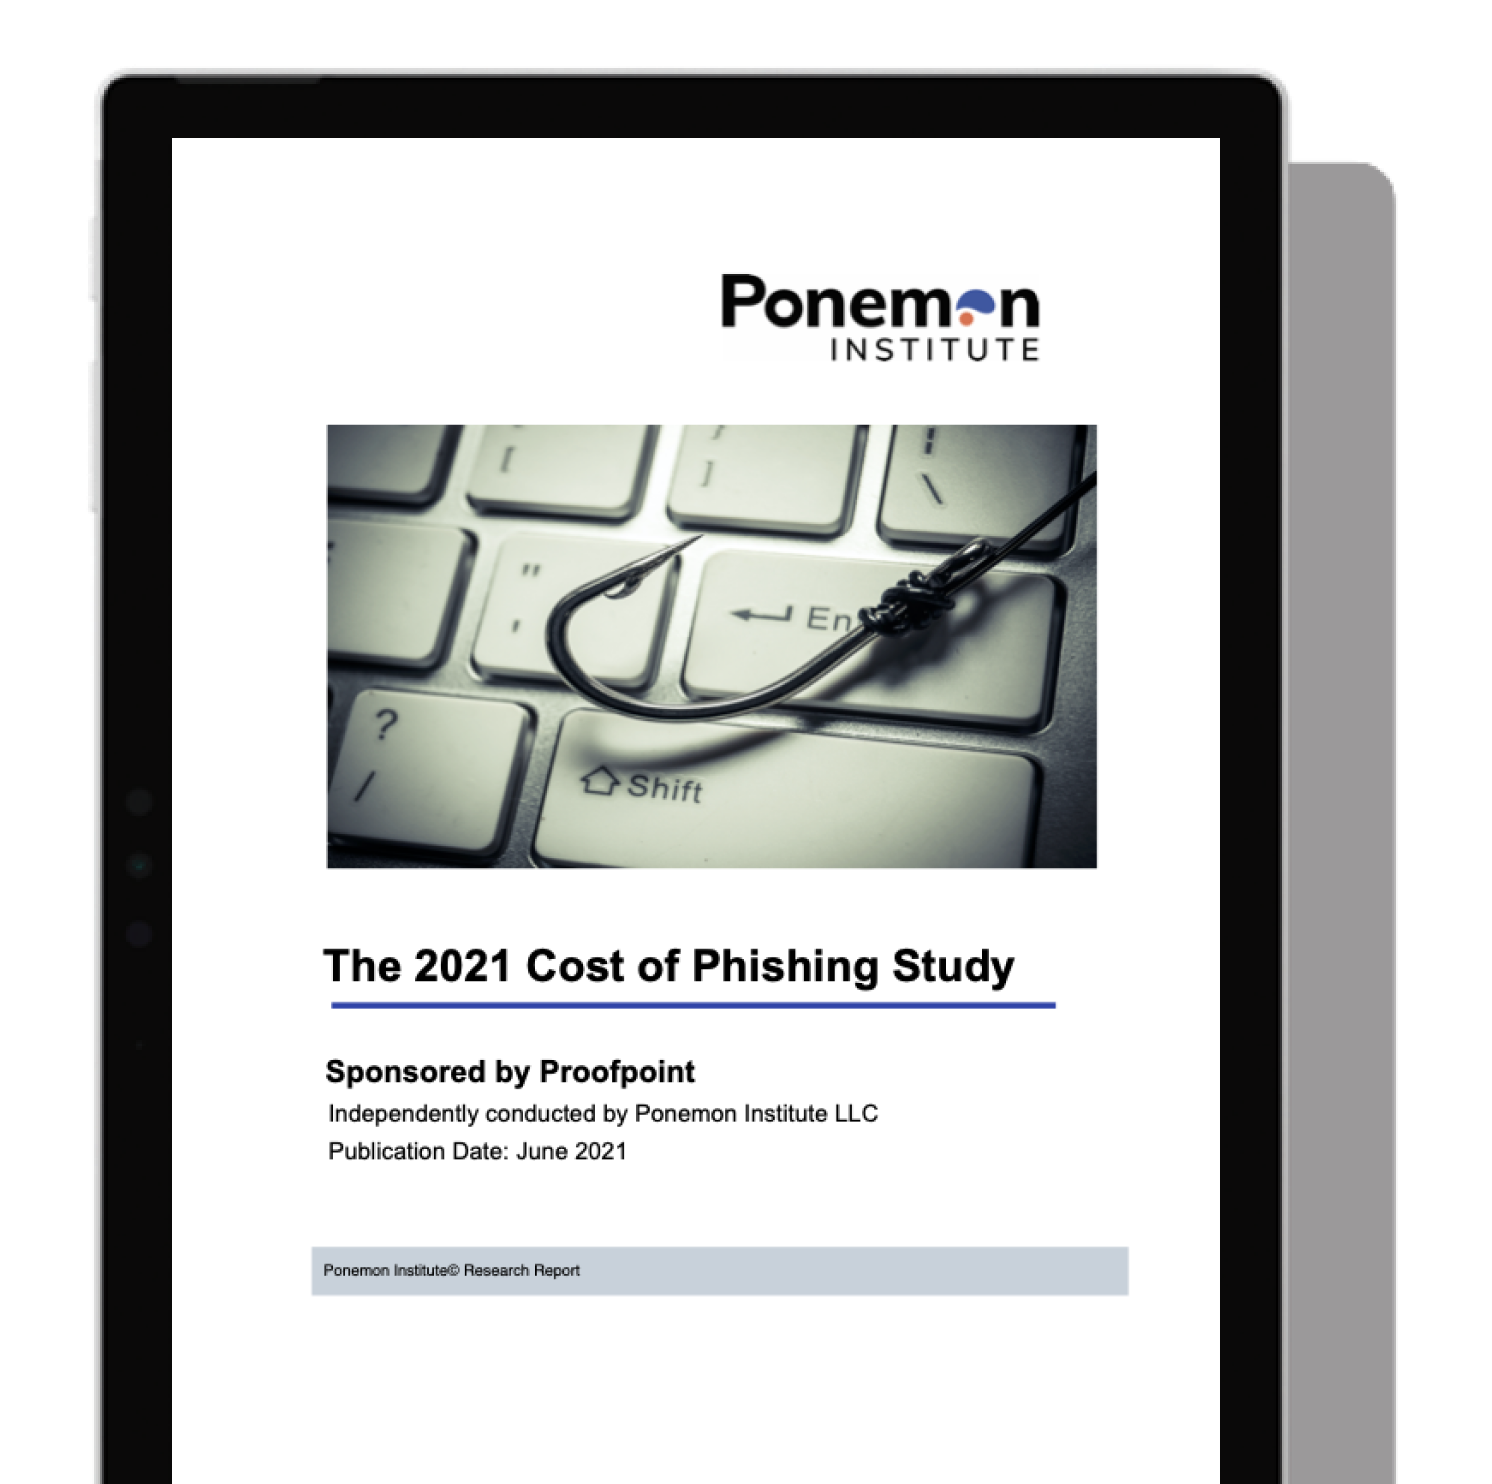 The 2021 Cost of Phishing Study